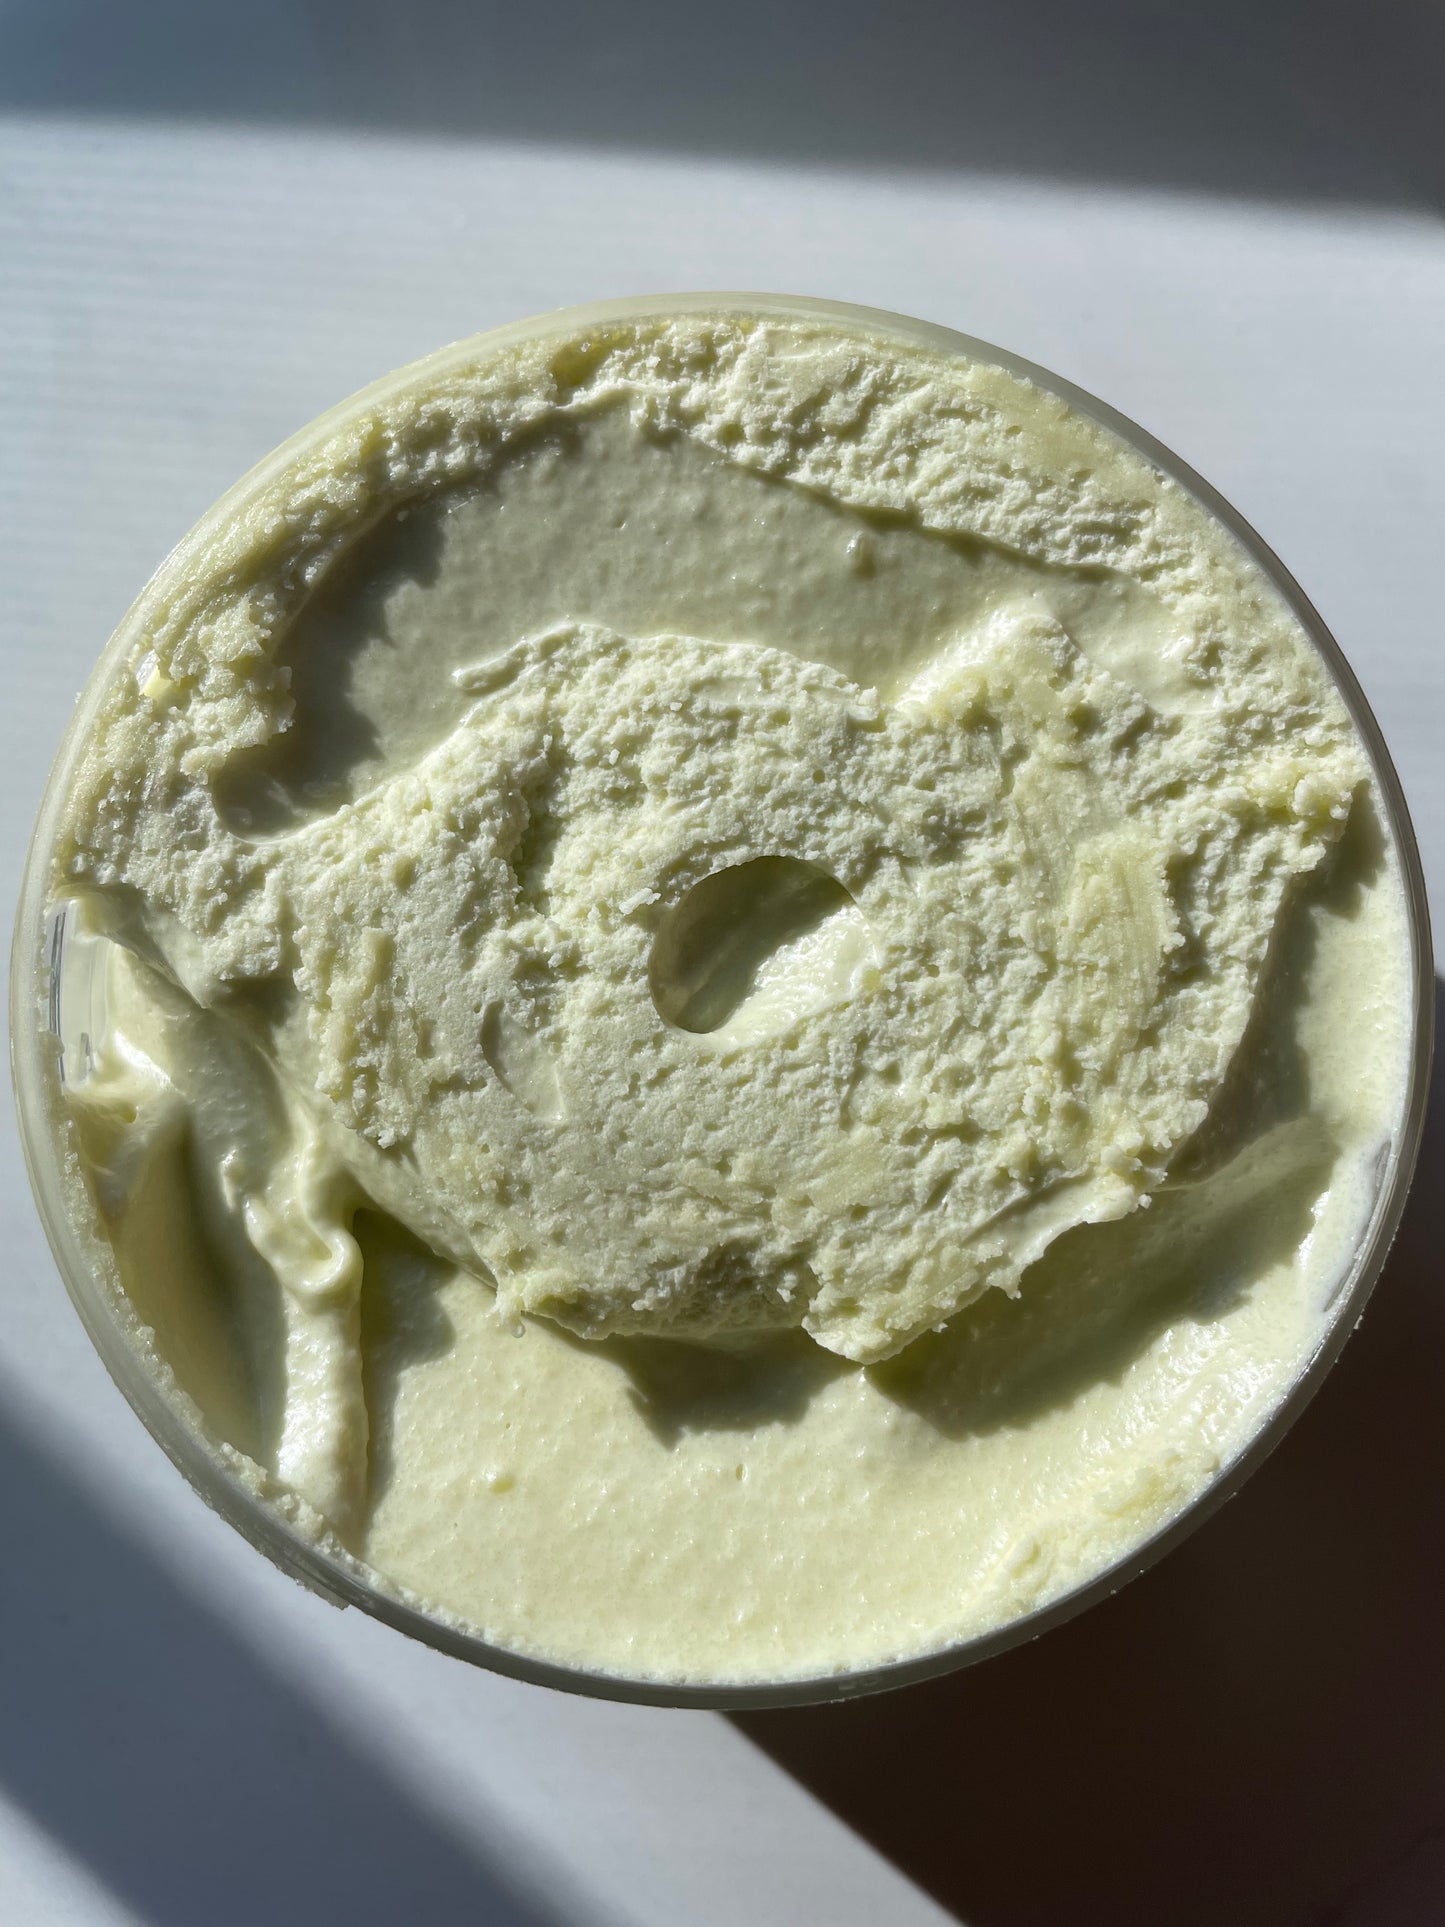 Eczema Pudding Cream